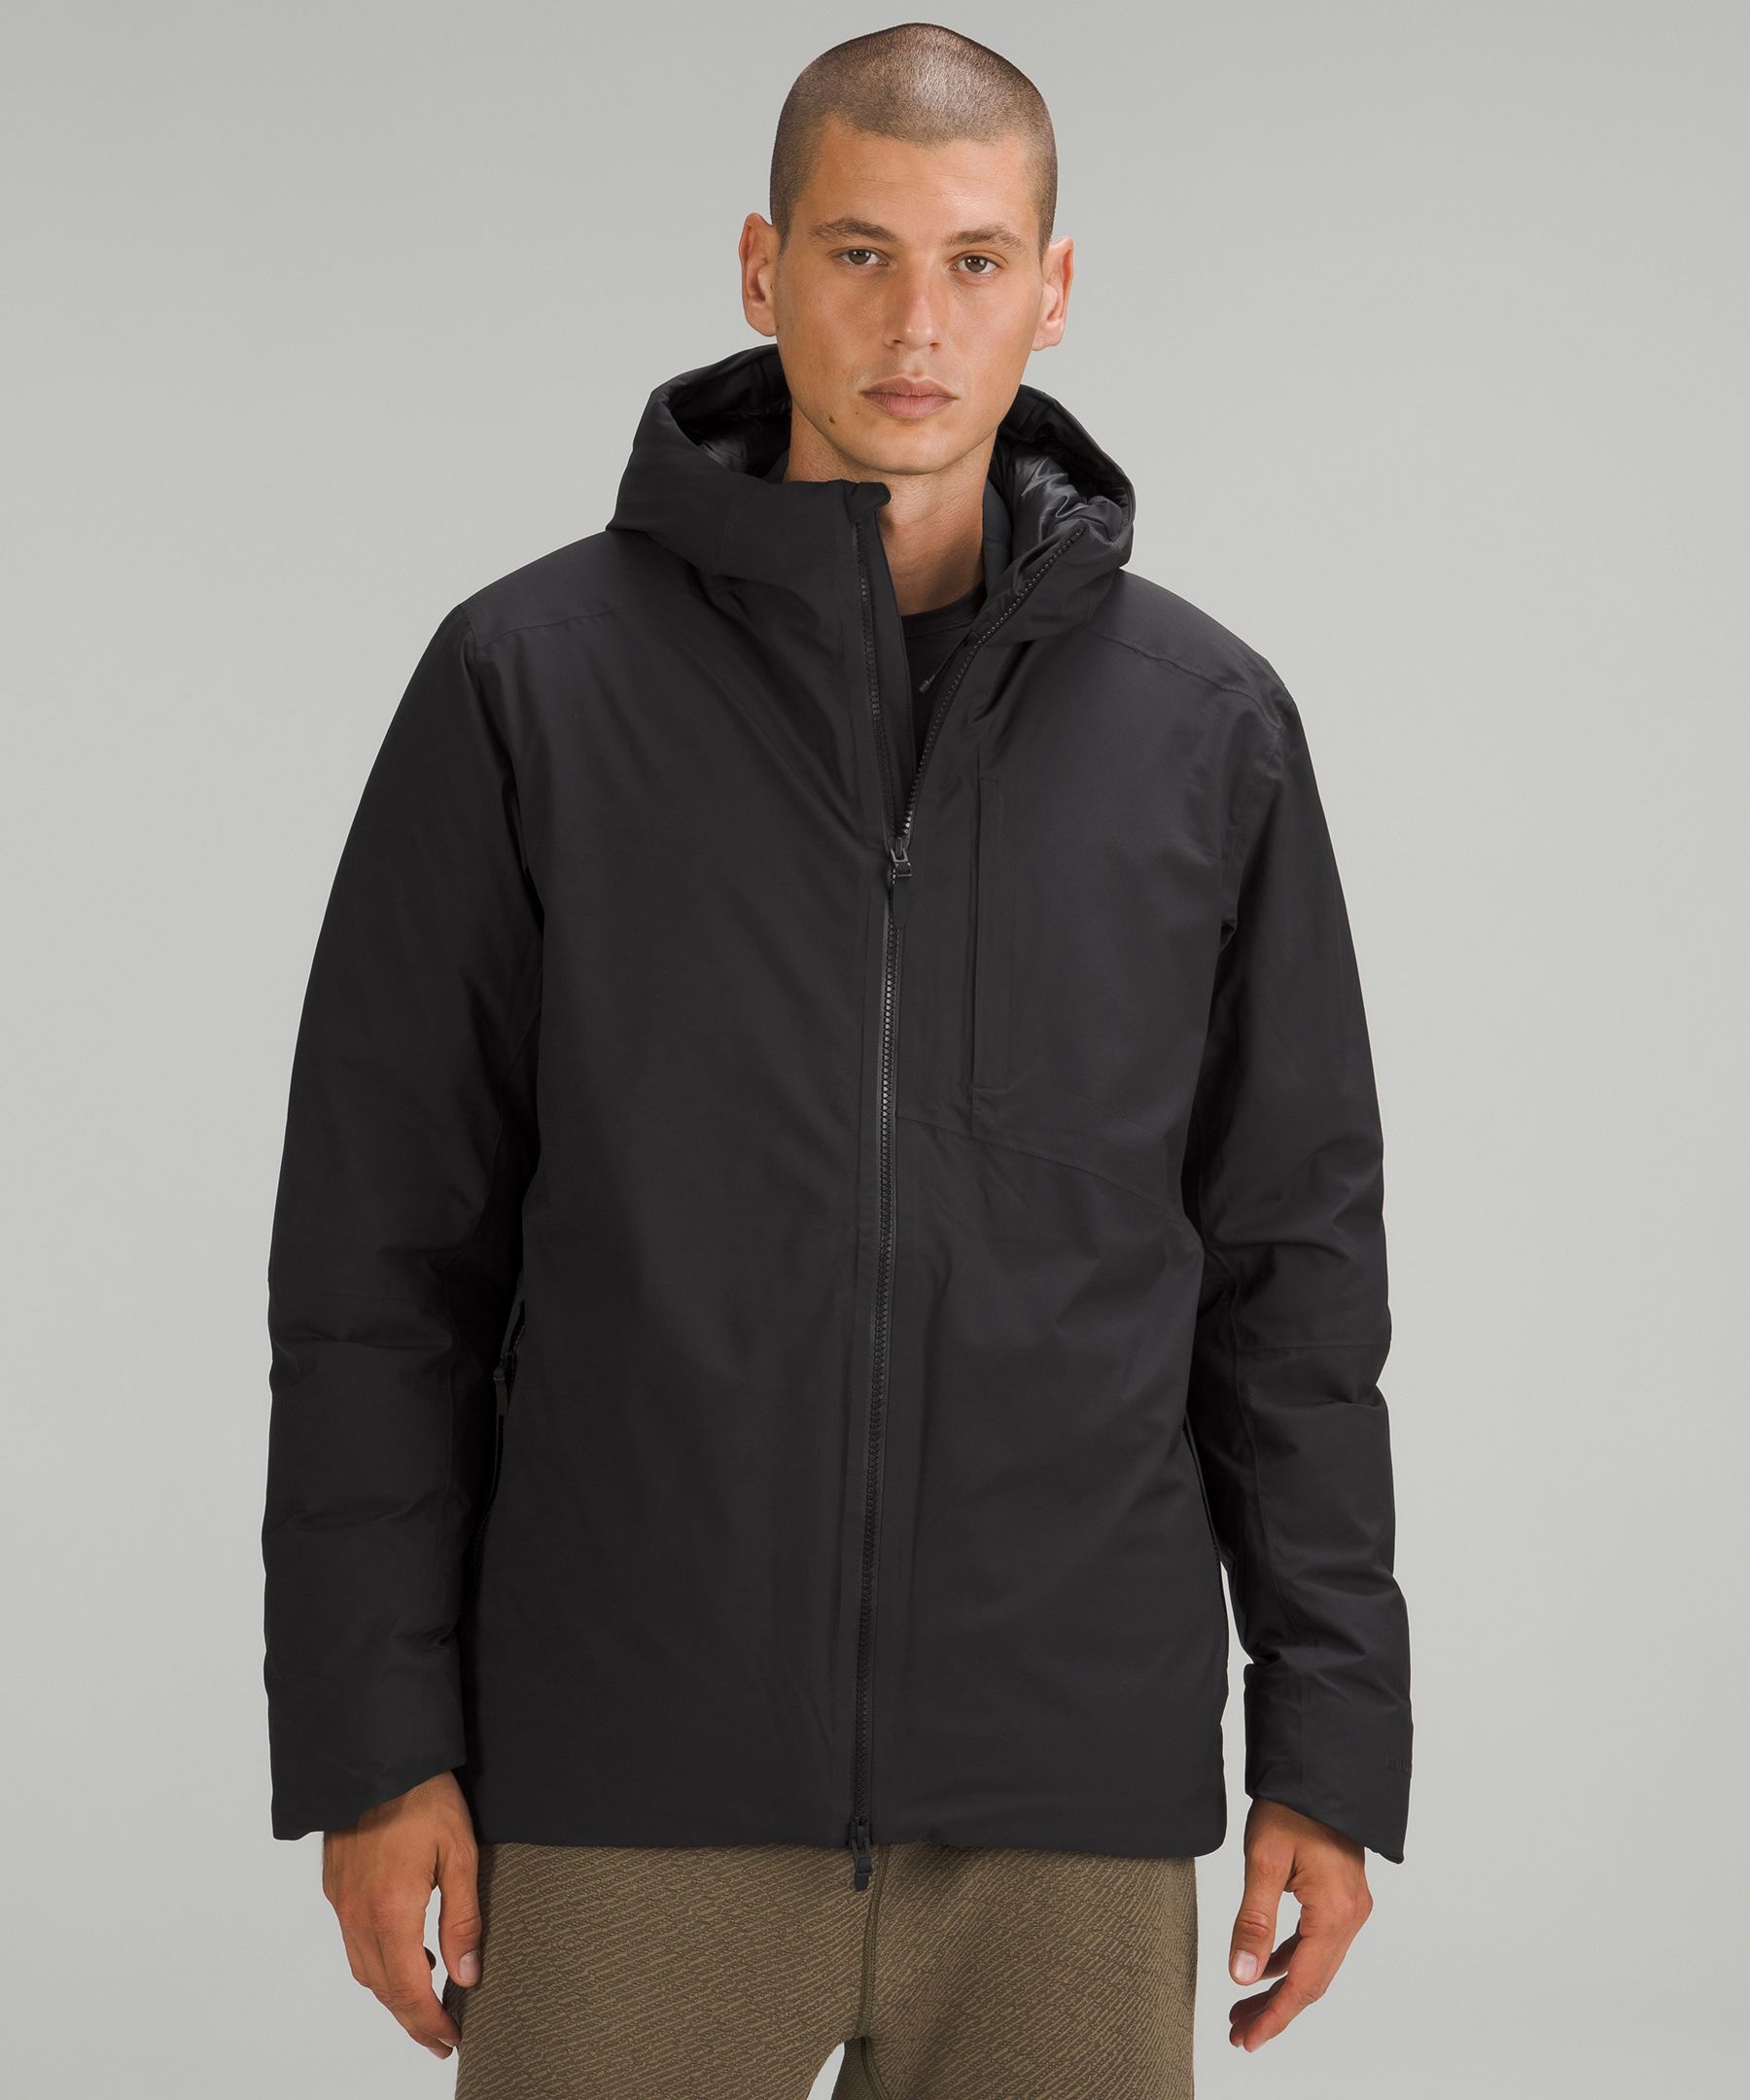 Pinnacle Warmth Jacket | Coats and Jackets | Lululemon NZ